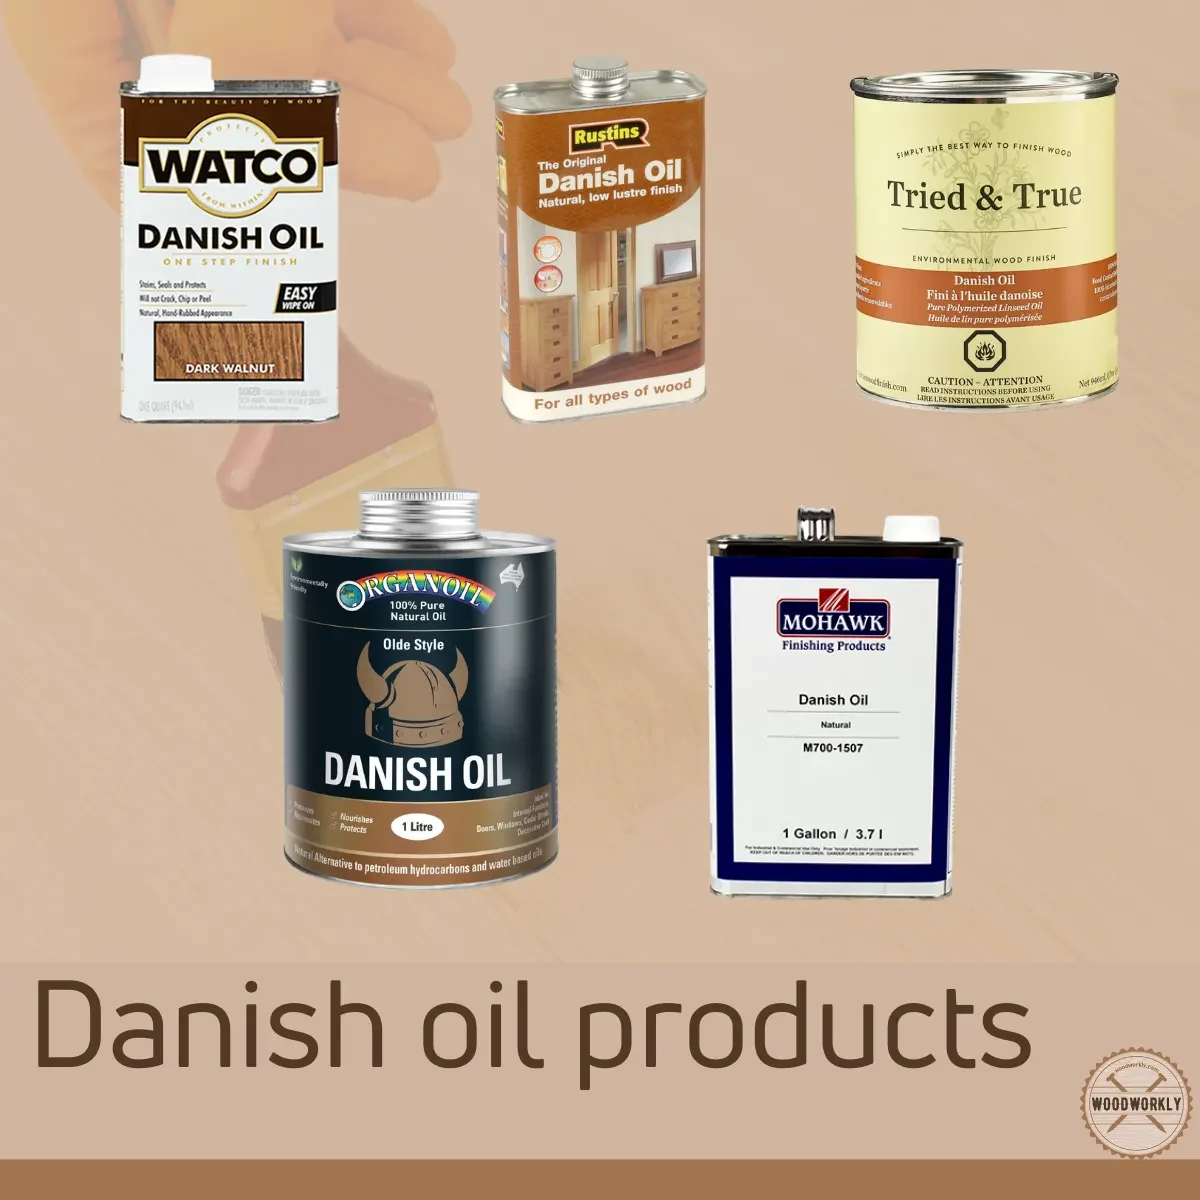 Danish oil products